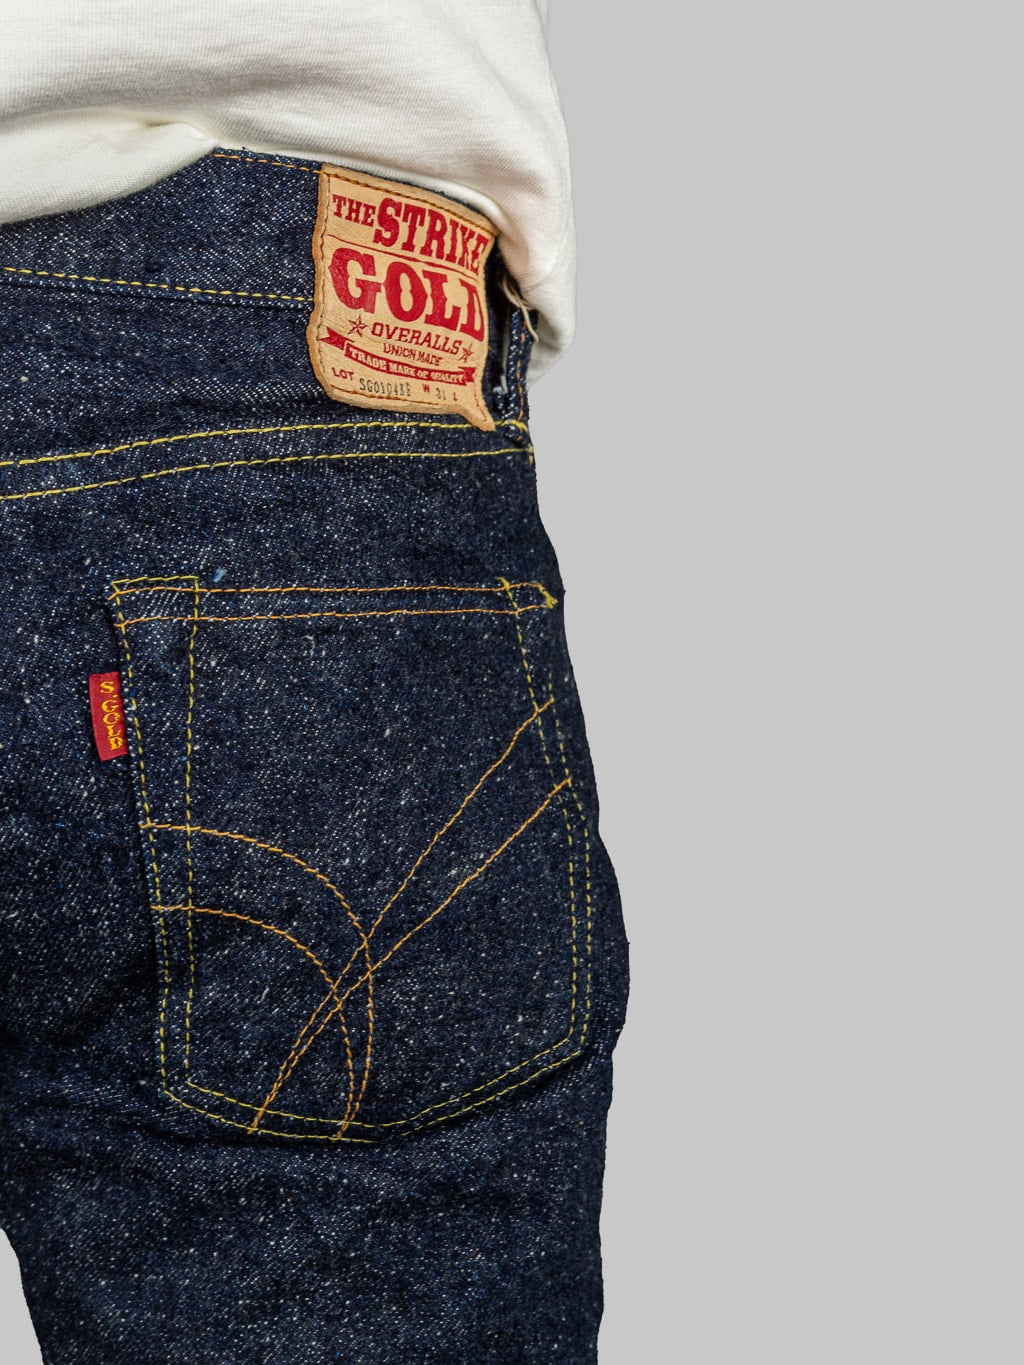 The Strike Gold Keep Earth Natural Indigo Jeans back pocket